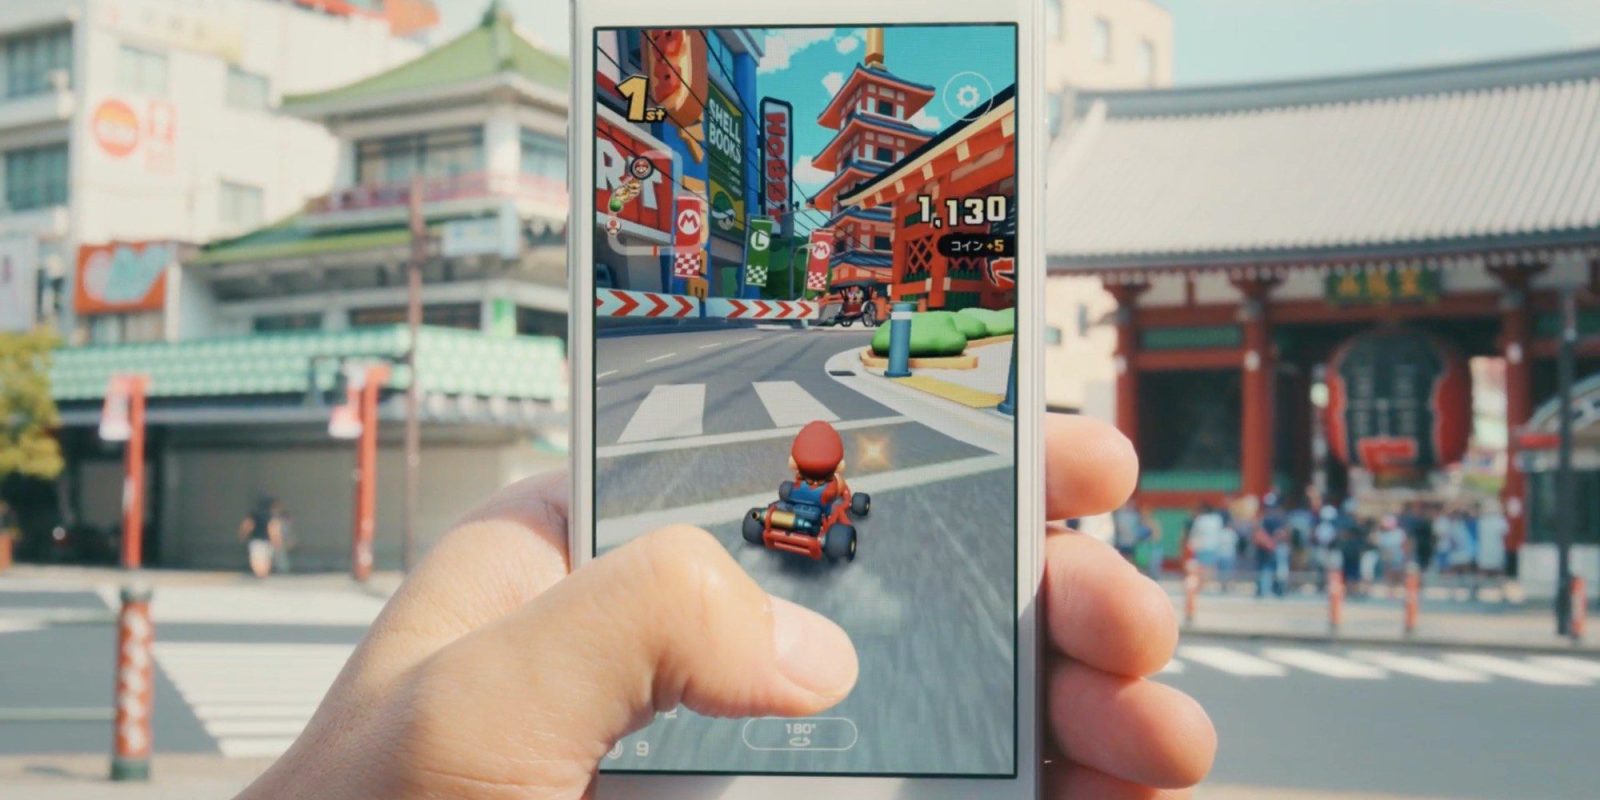 Mario Kart Tour: Latest Nintendo game now available on Android, iOS